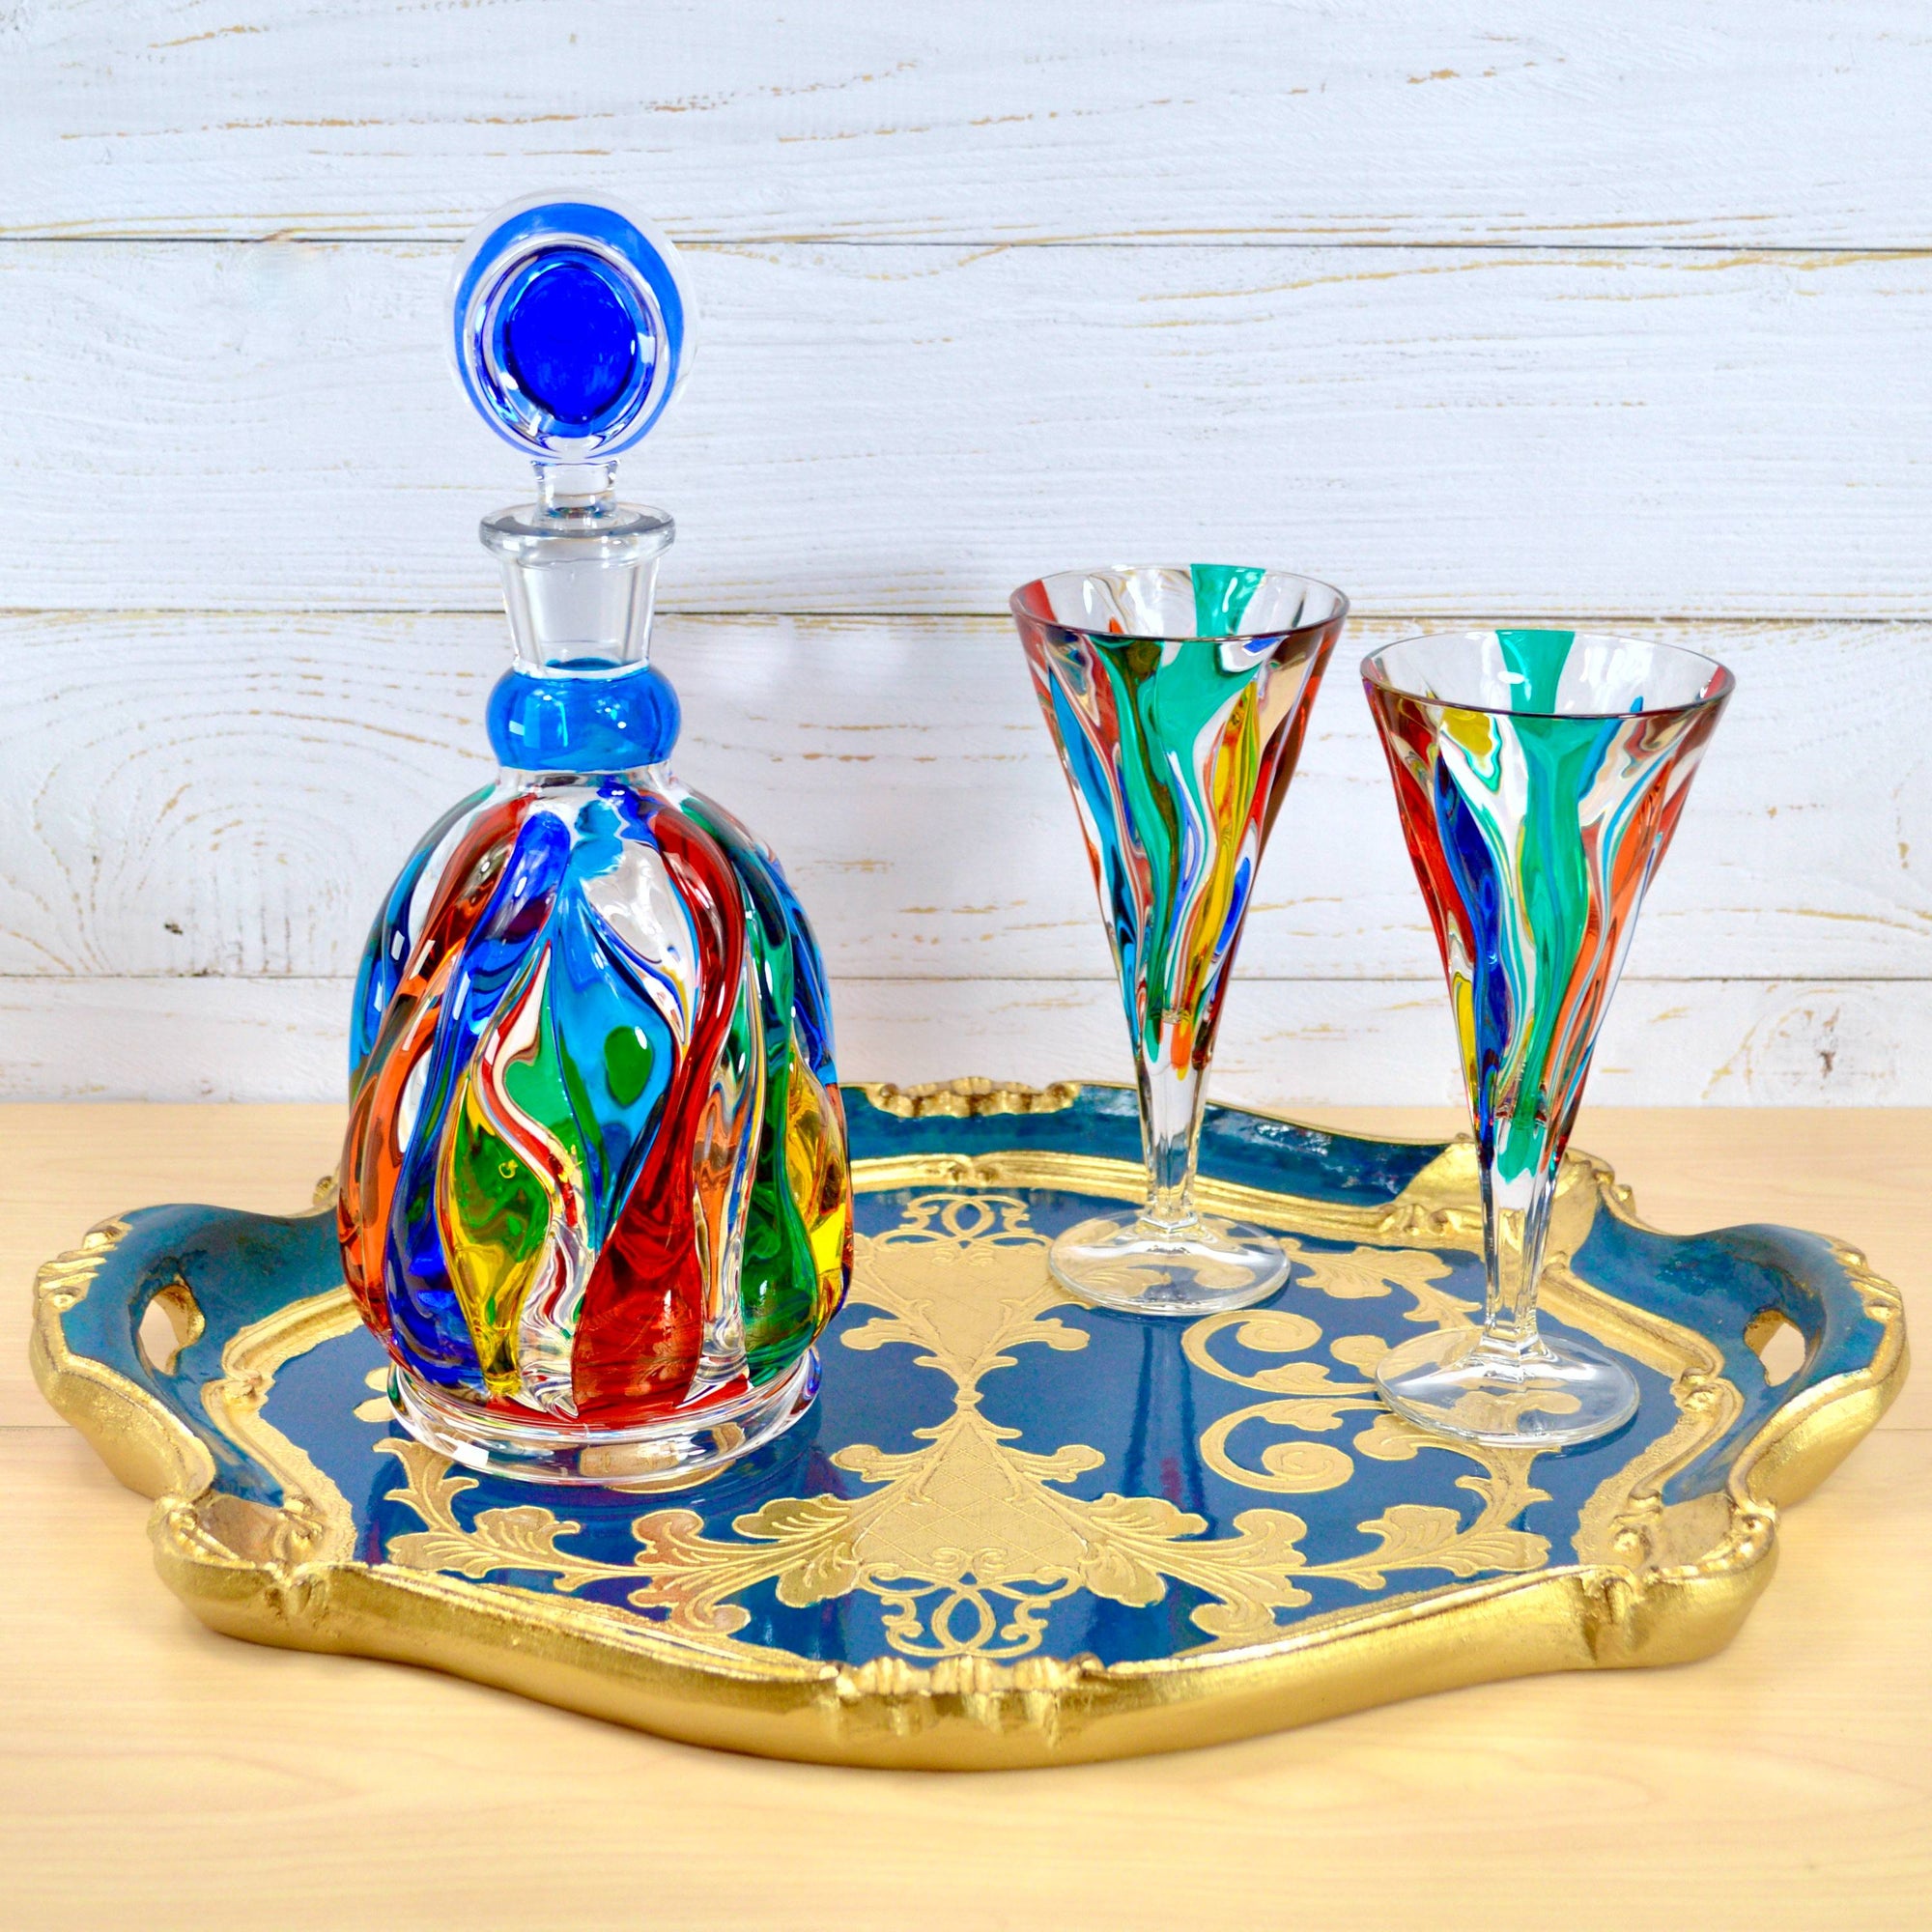 Jazz Round Decanter, Hand-Painted Italian Crystal, Made in Italy - My Italian Decor